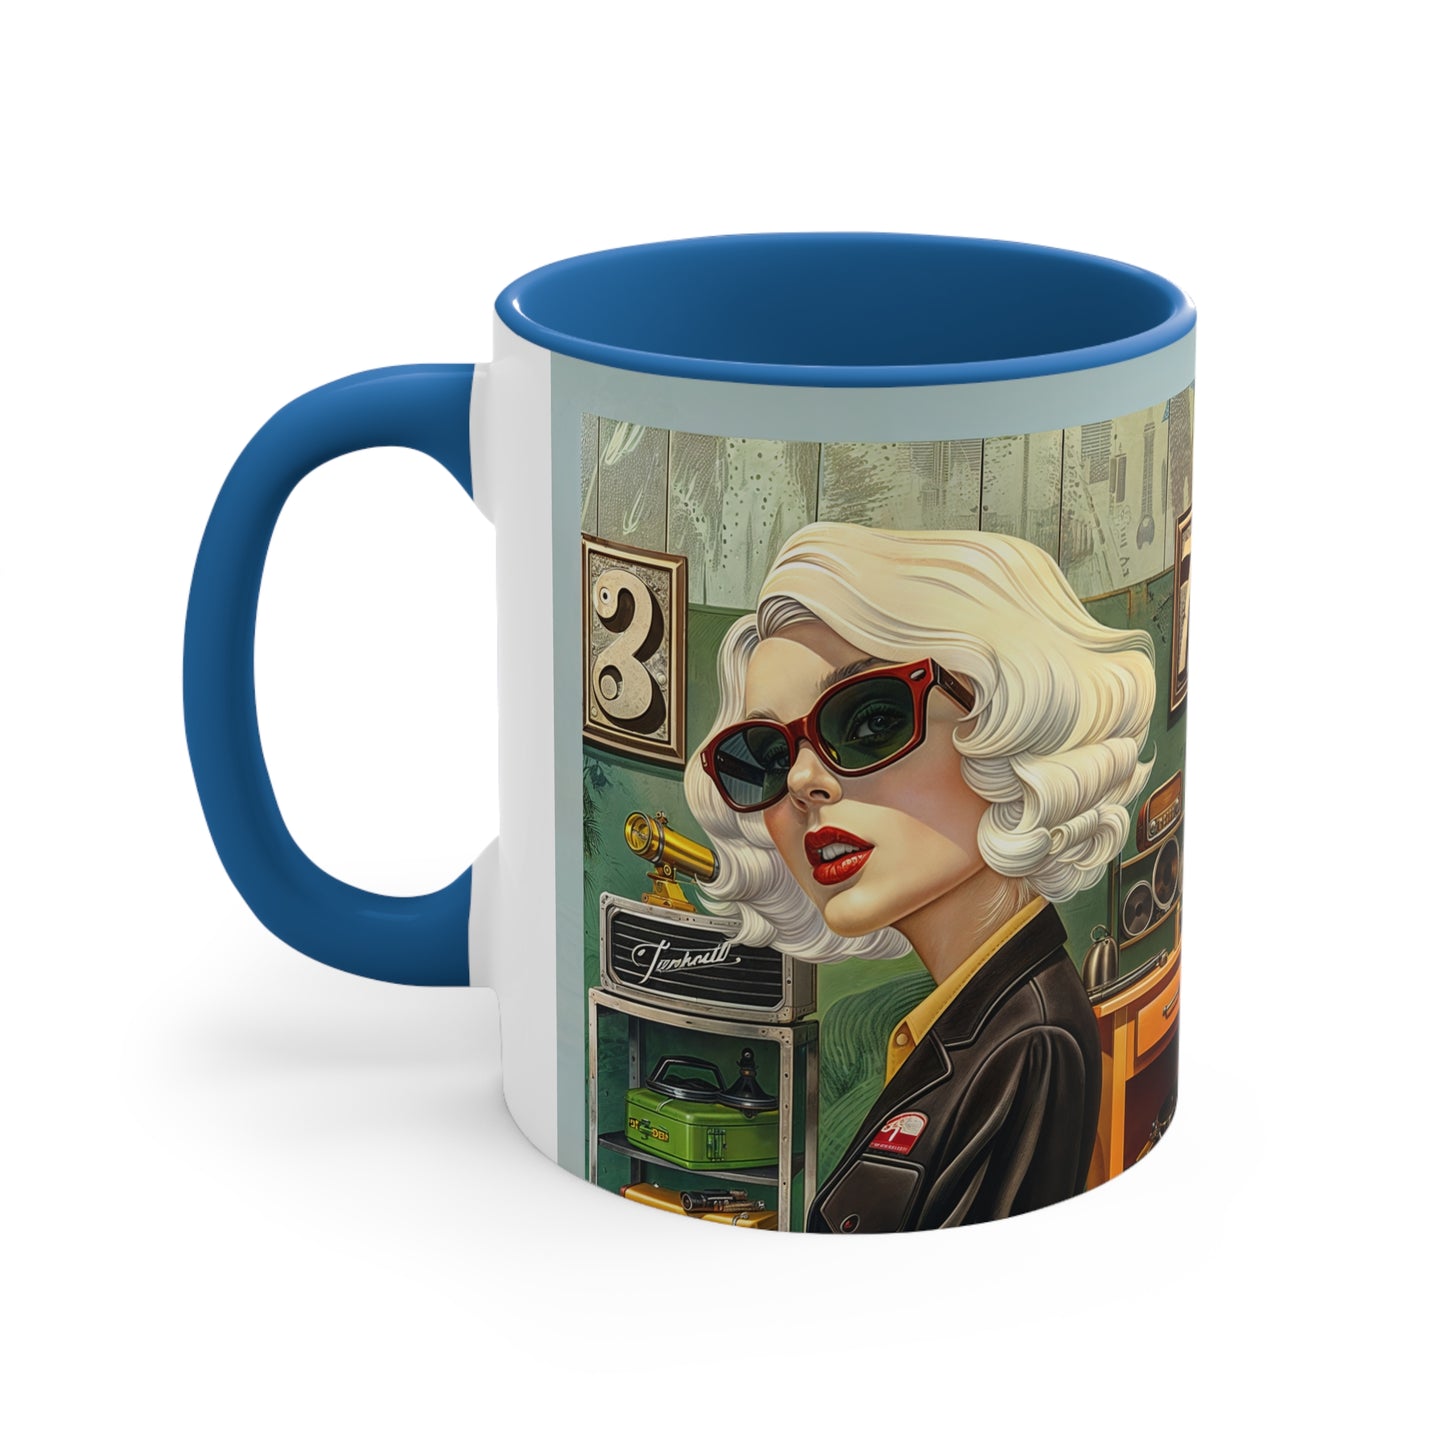 Accent Coffee Mug, 11oz - Tool Time Blonde-blue side